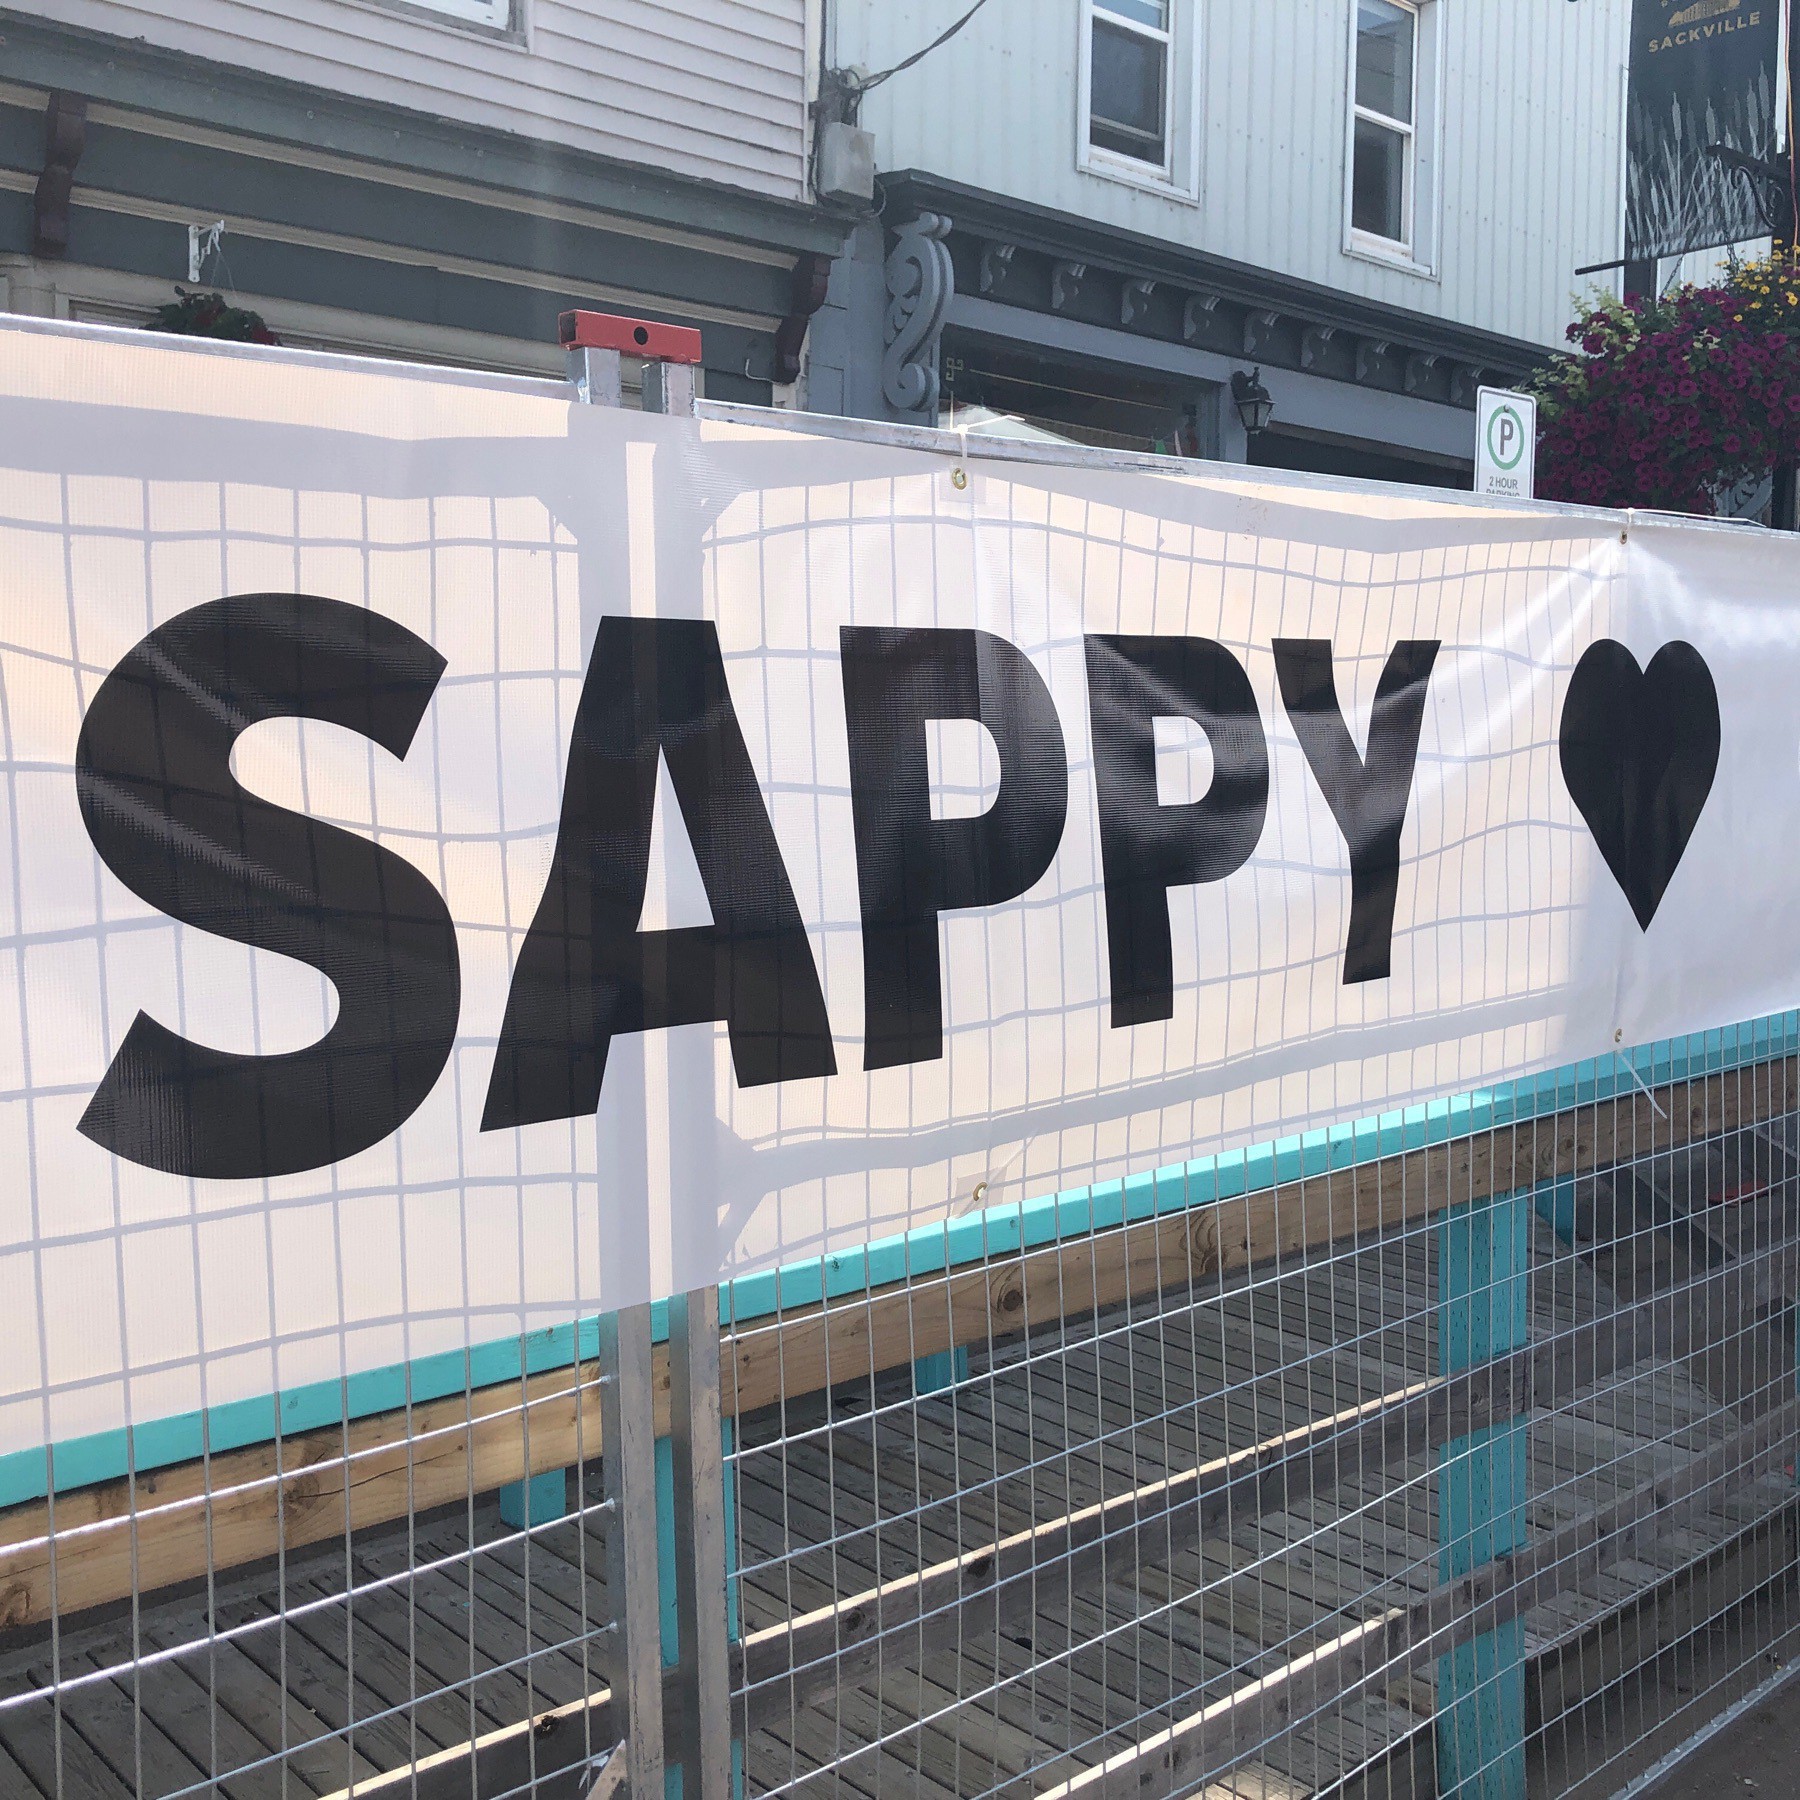 Sappy on banner.